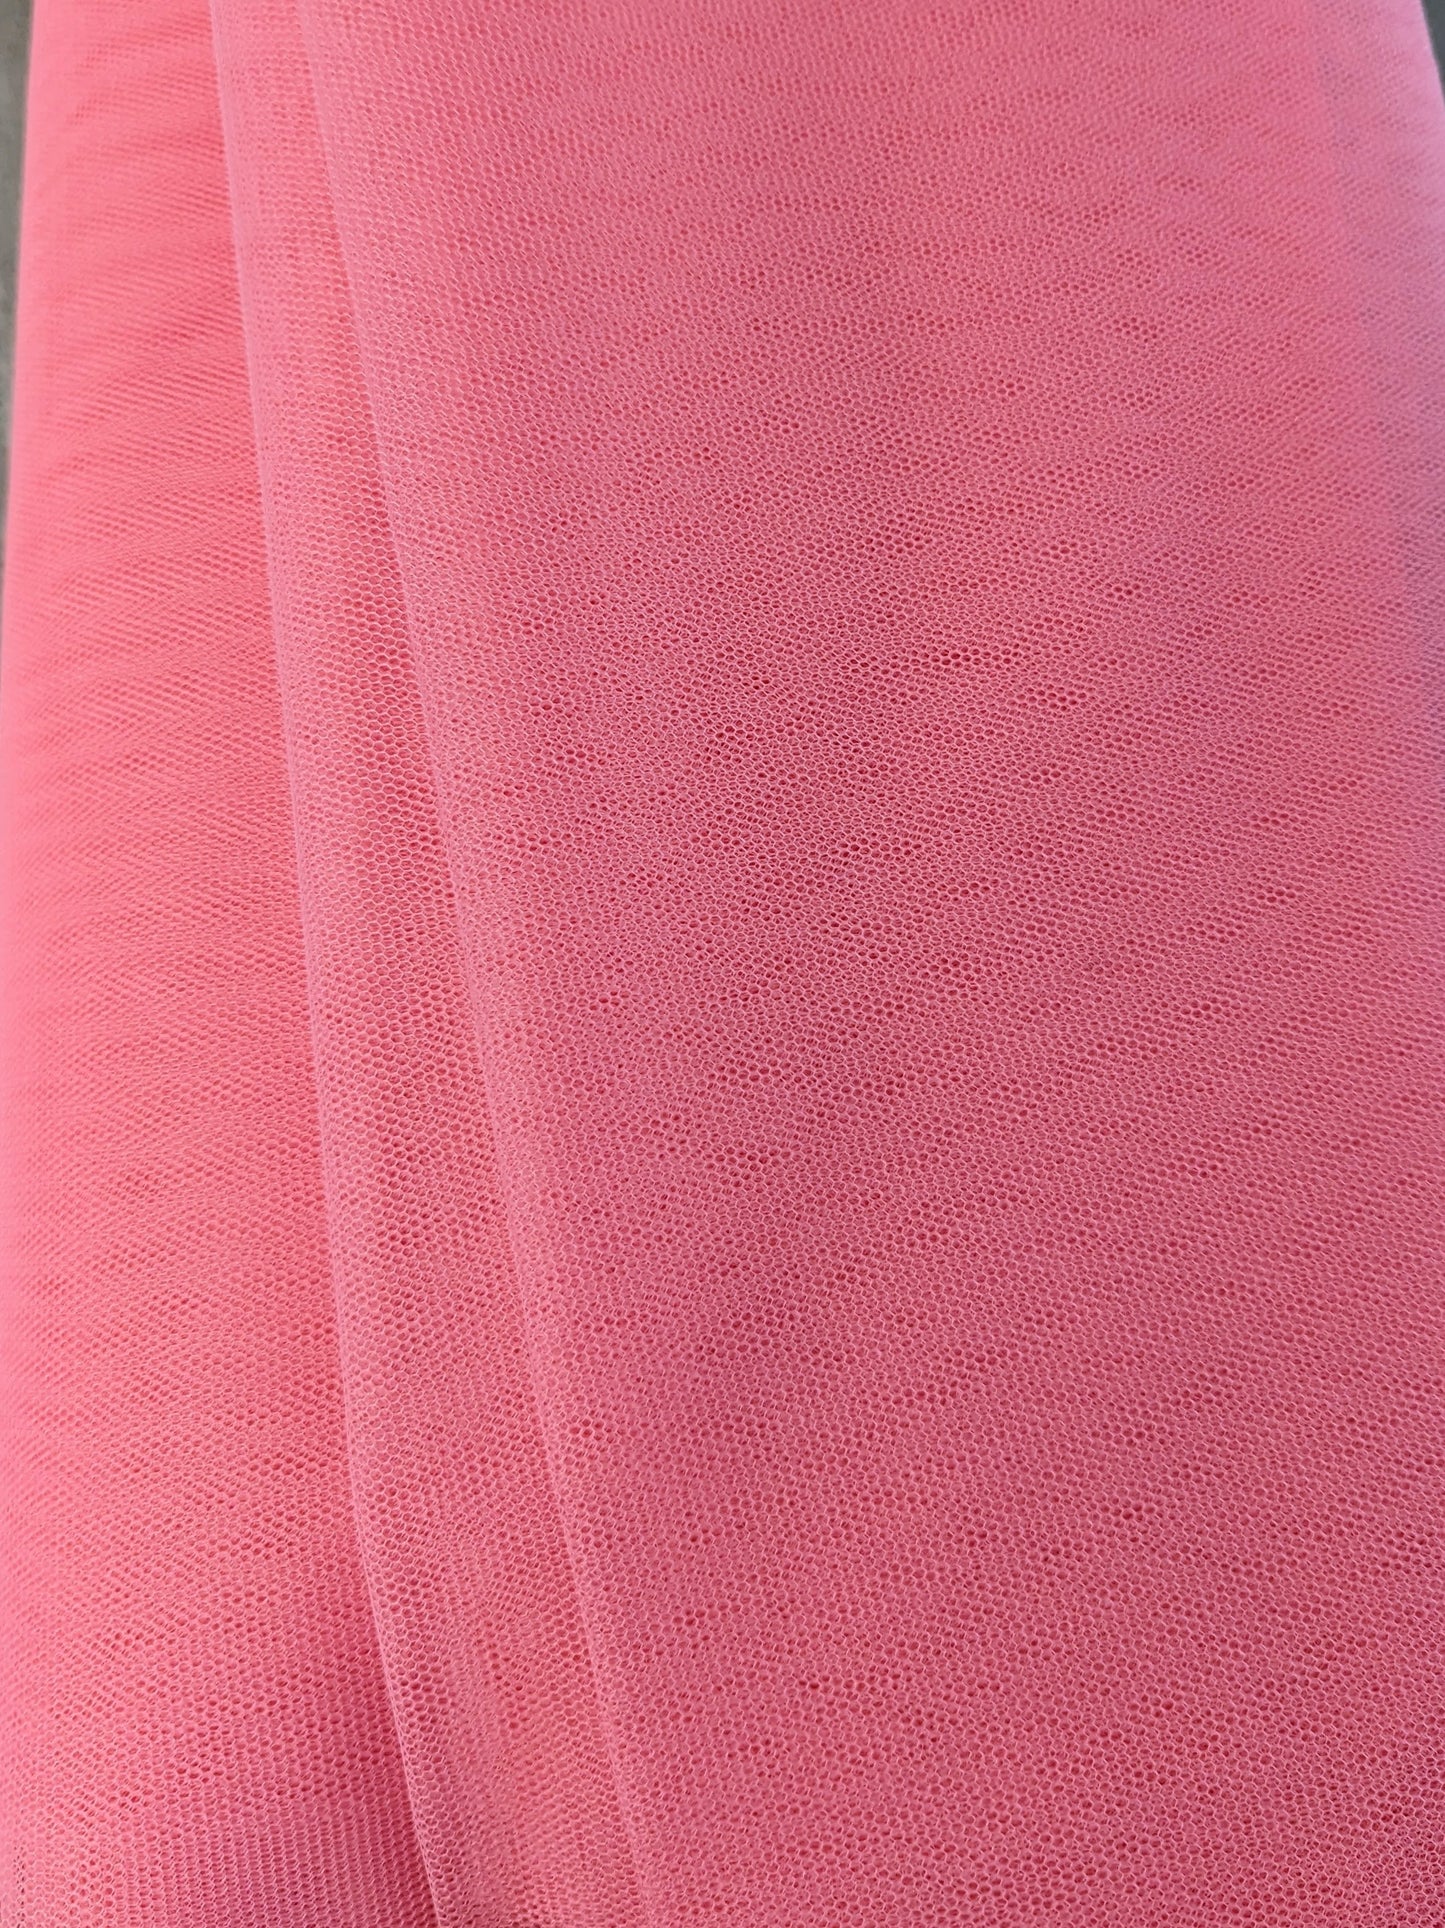 Nylon Tutu Net - Salmon Pink - Dazzle Me Dancewear